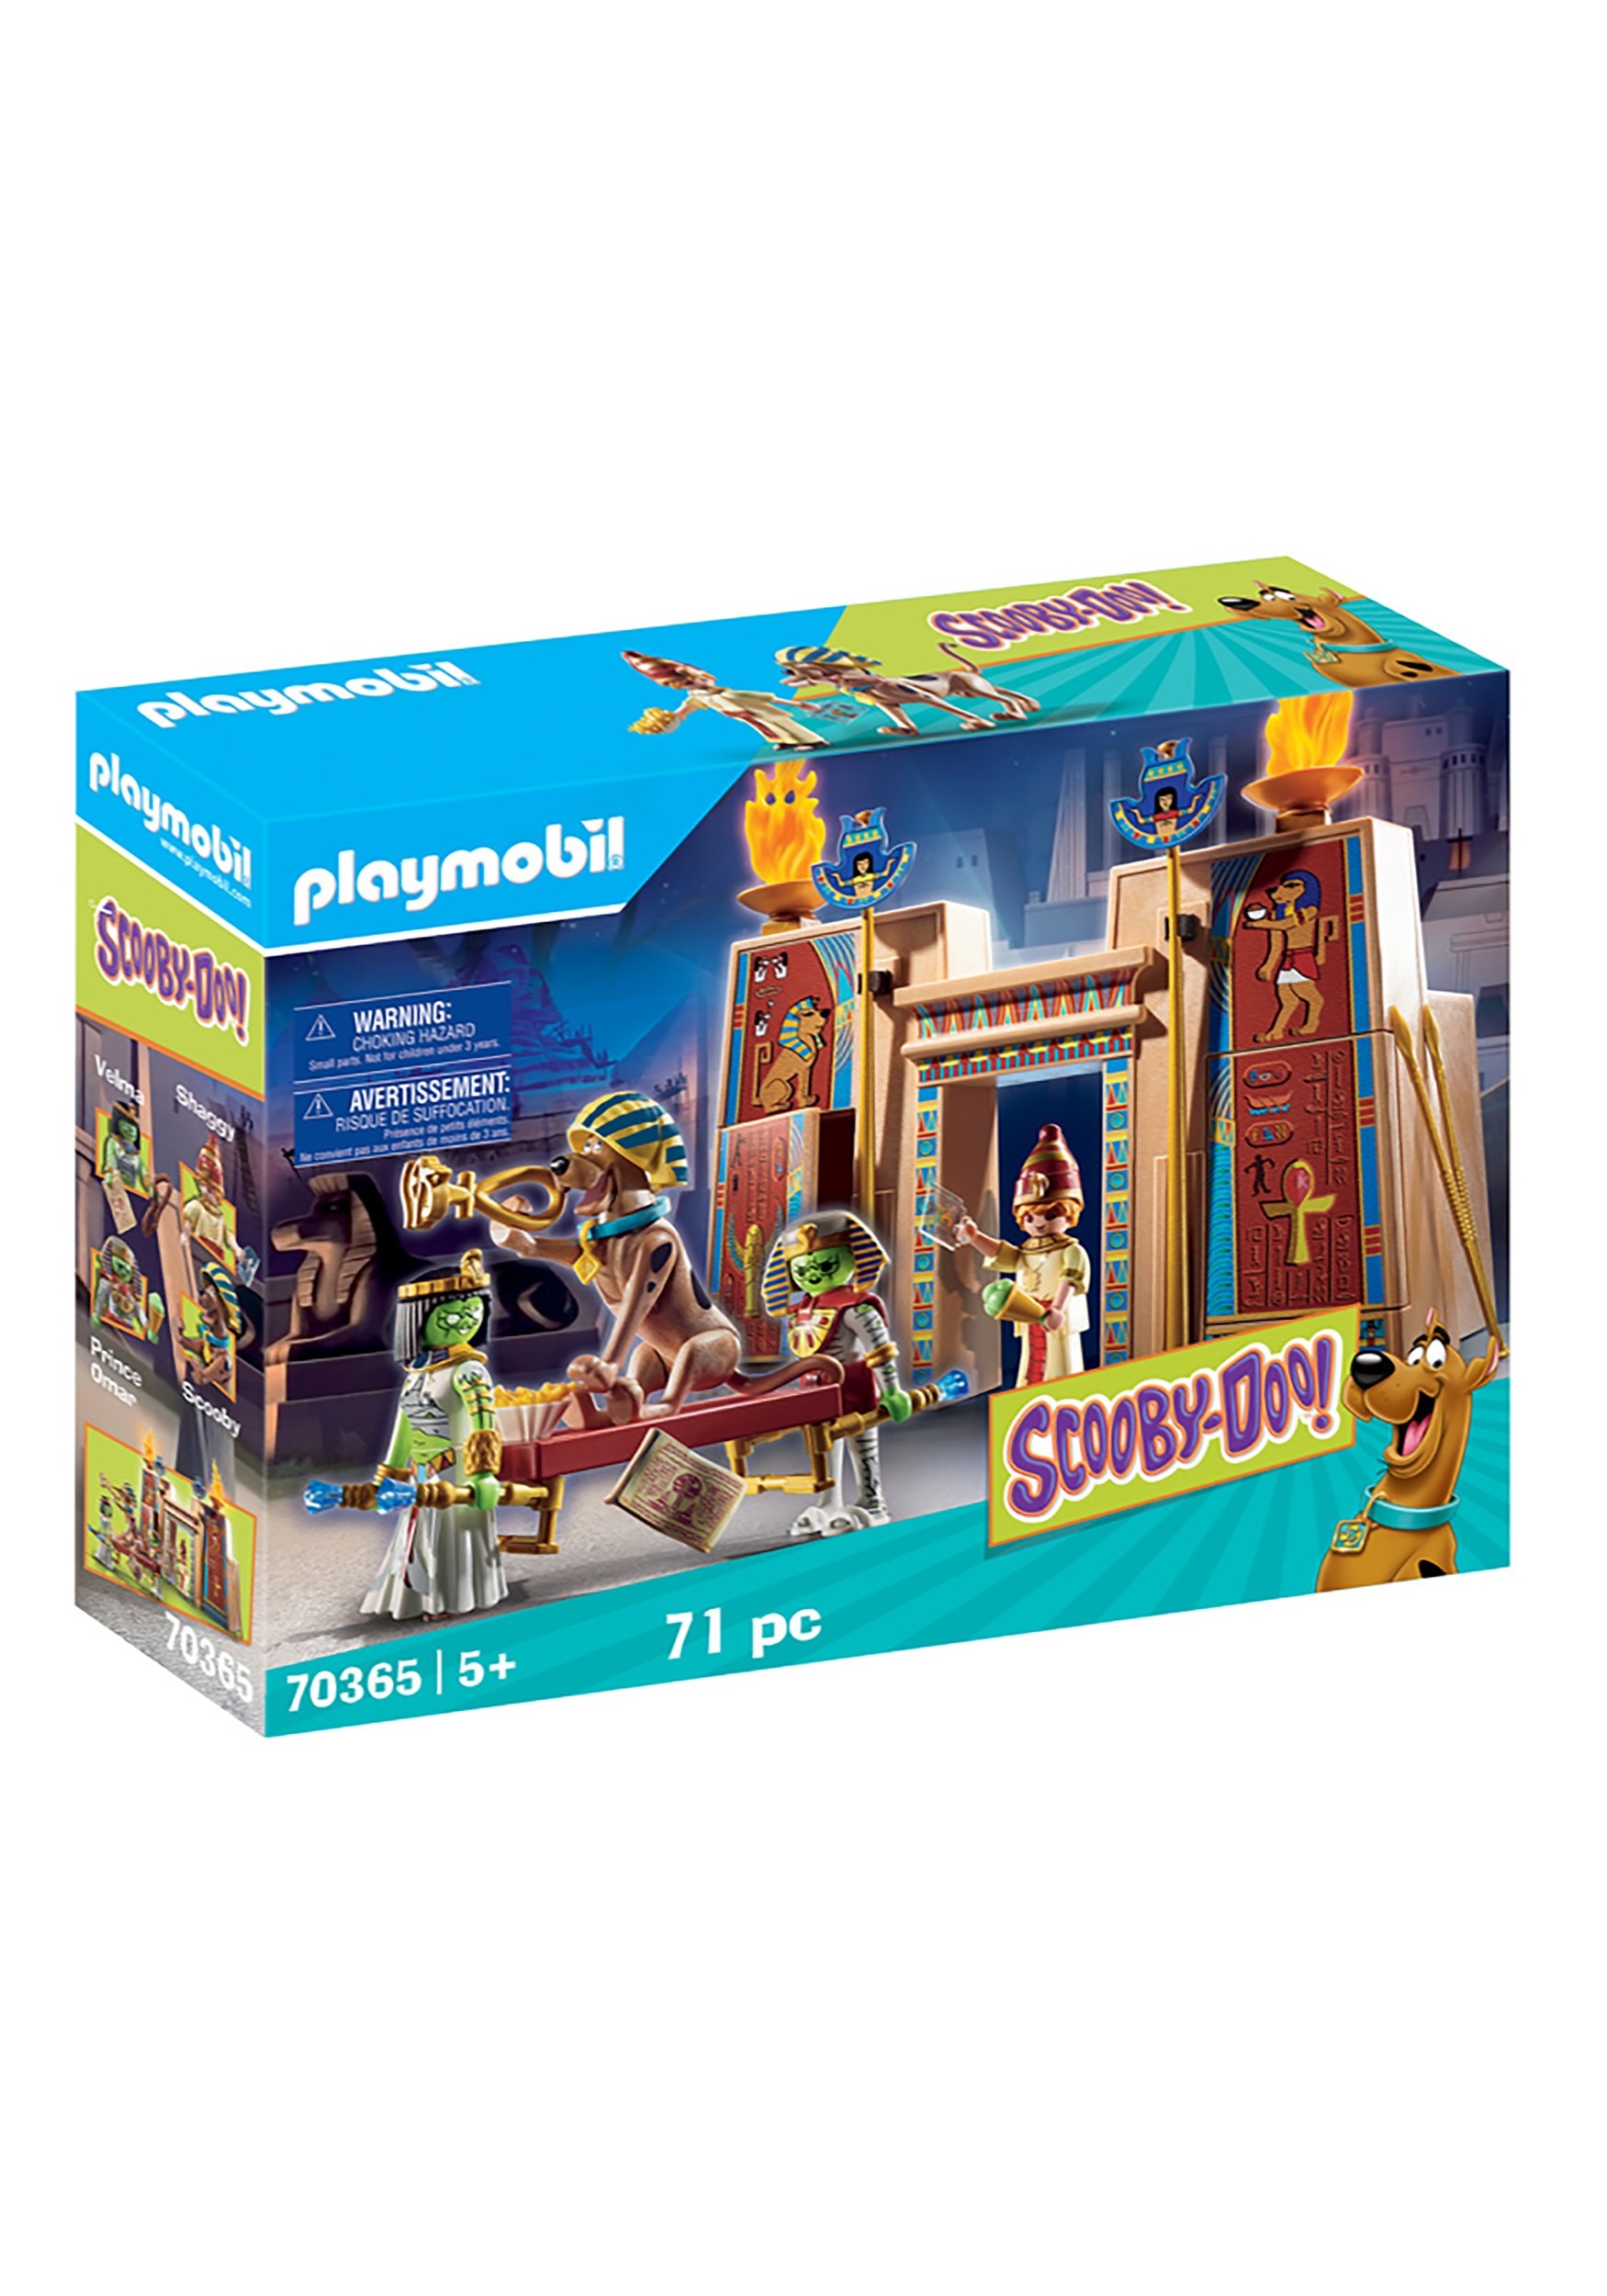 Adventure in Egypt Playmobil SCOOBY-DOO!